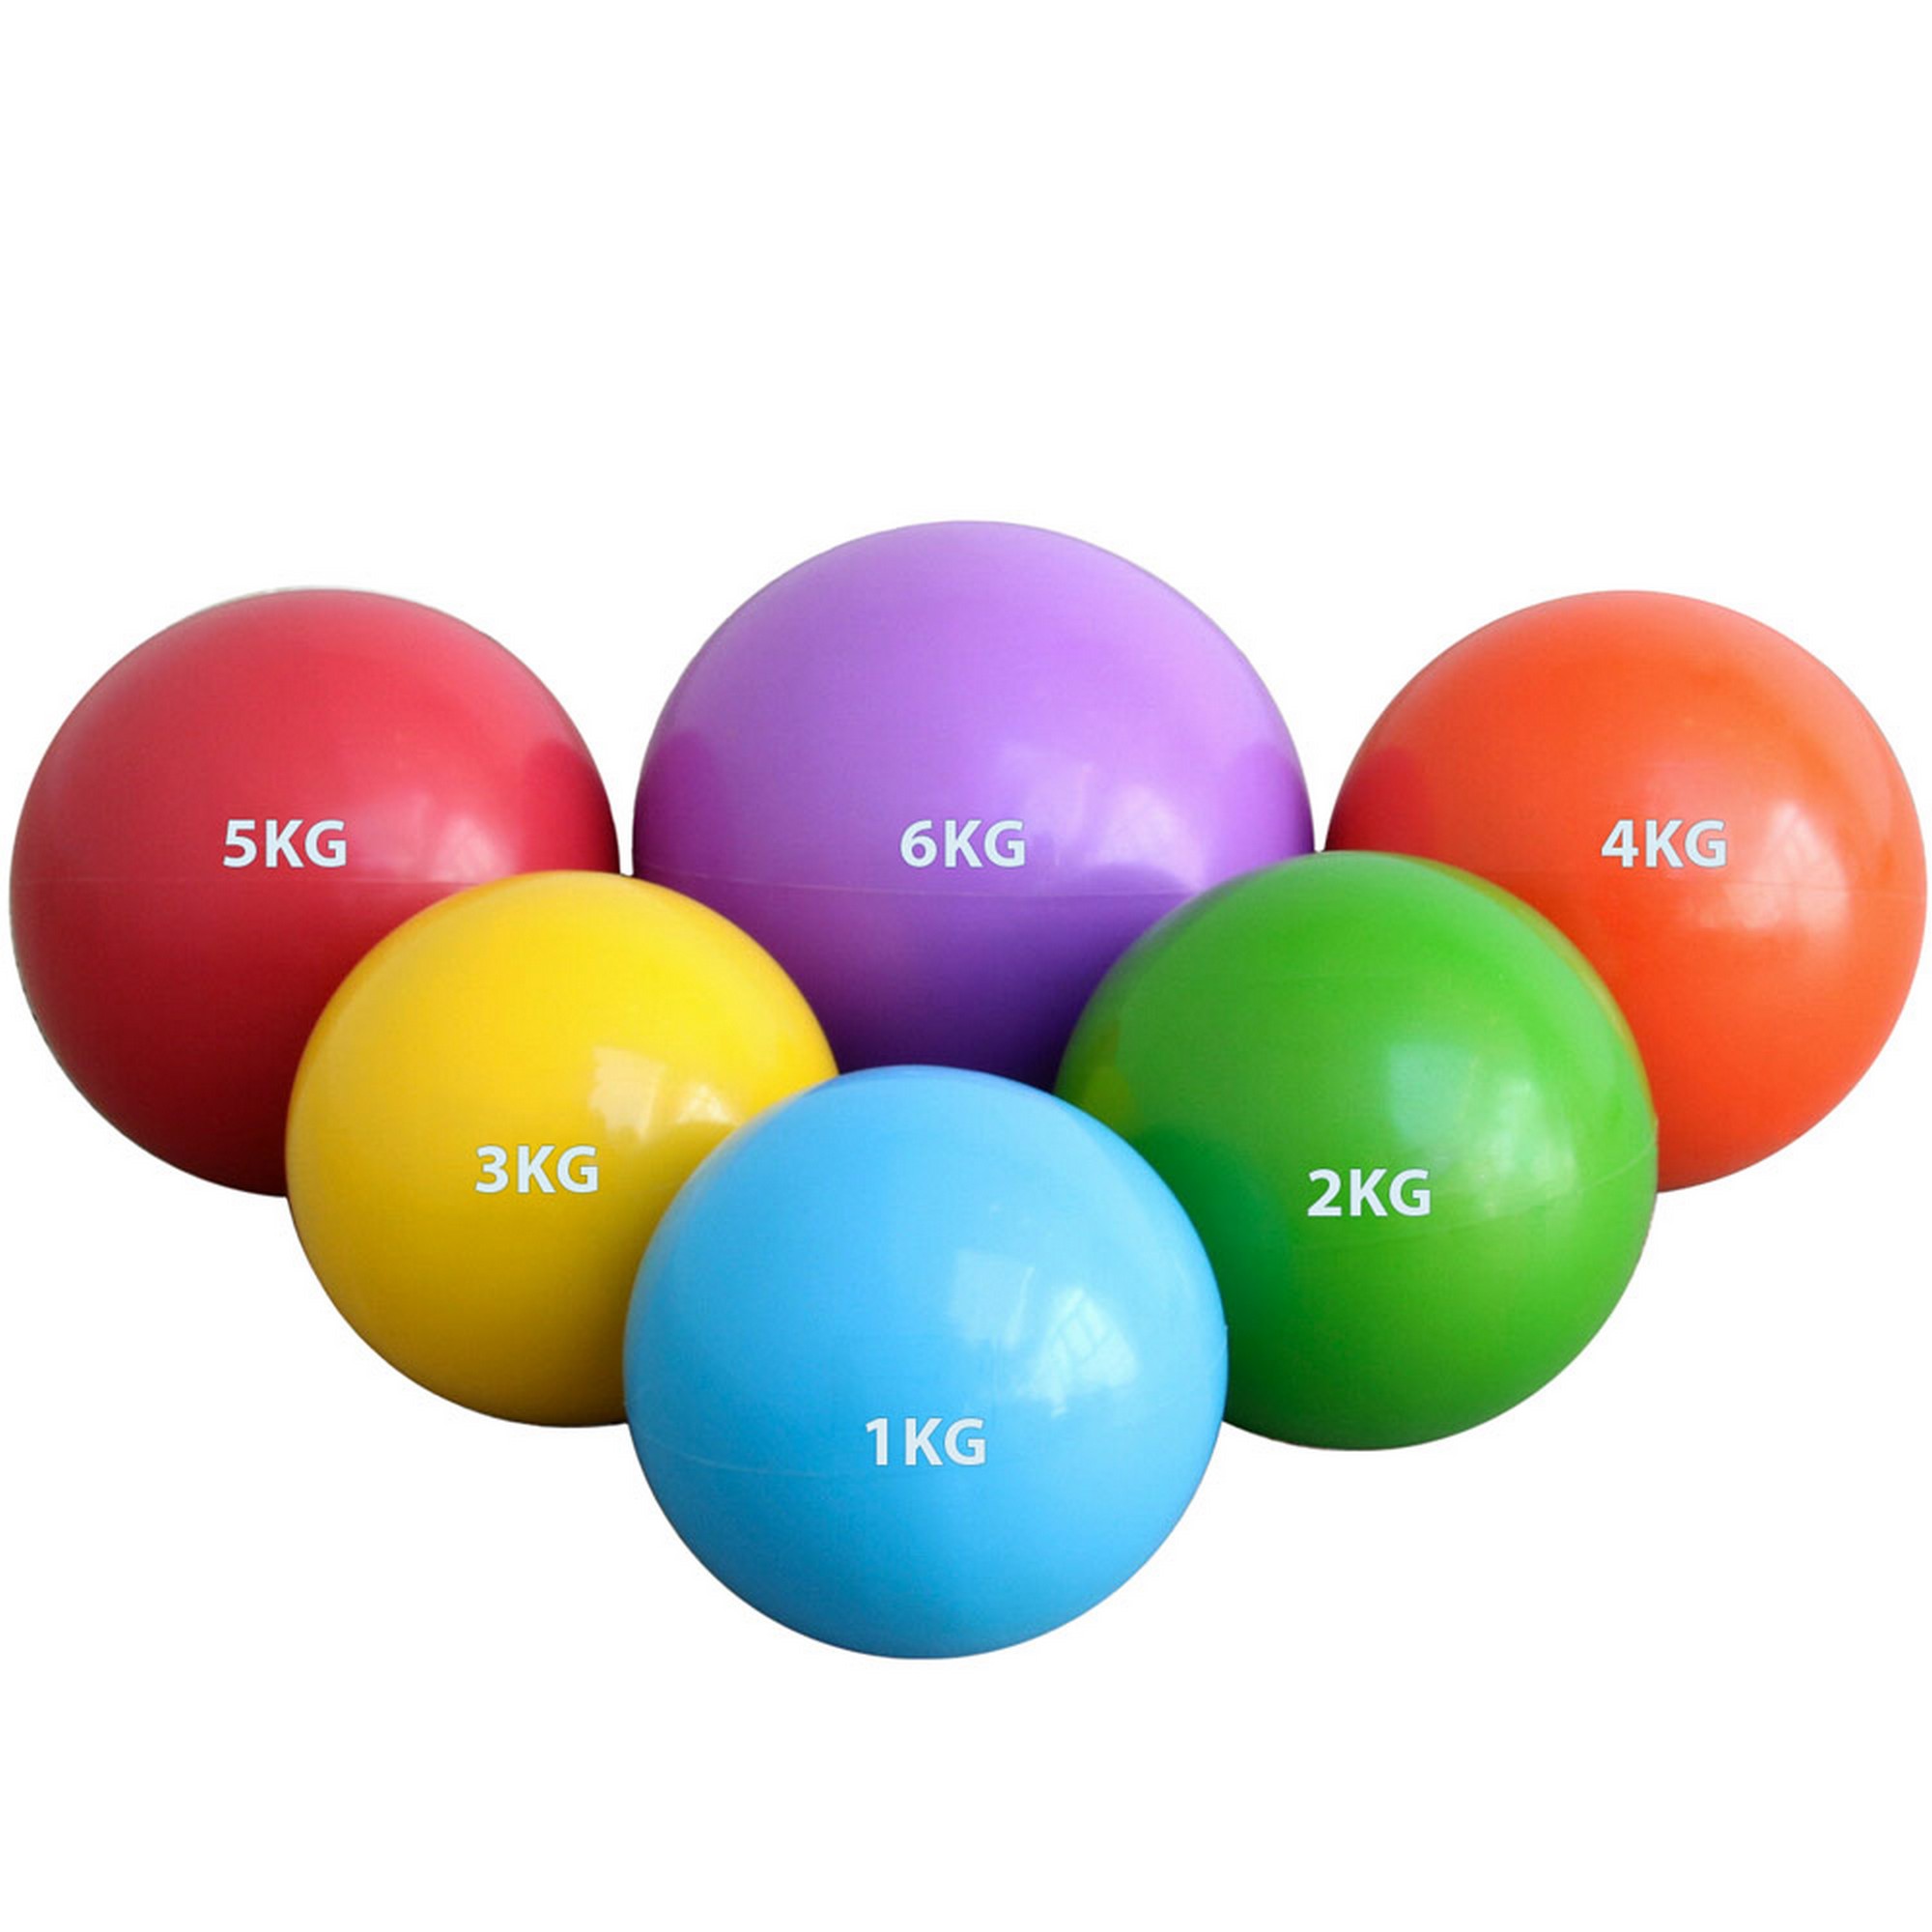 Весы мячи футбола. Hktb9011-3 медбол 3кг., d-15см. (Желтый). Медбол 3 кг. Мяч медбол 1 кг. Hktb9011-1 медбол 1кг., d-12см. (Голубой).